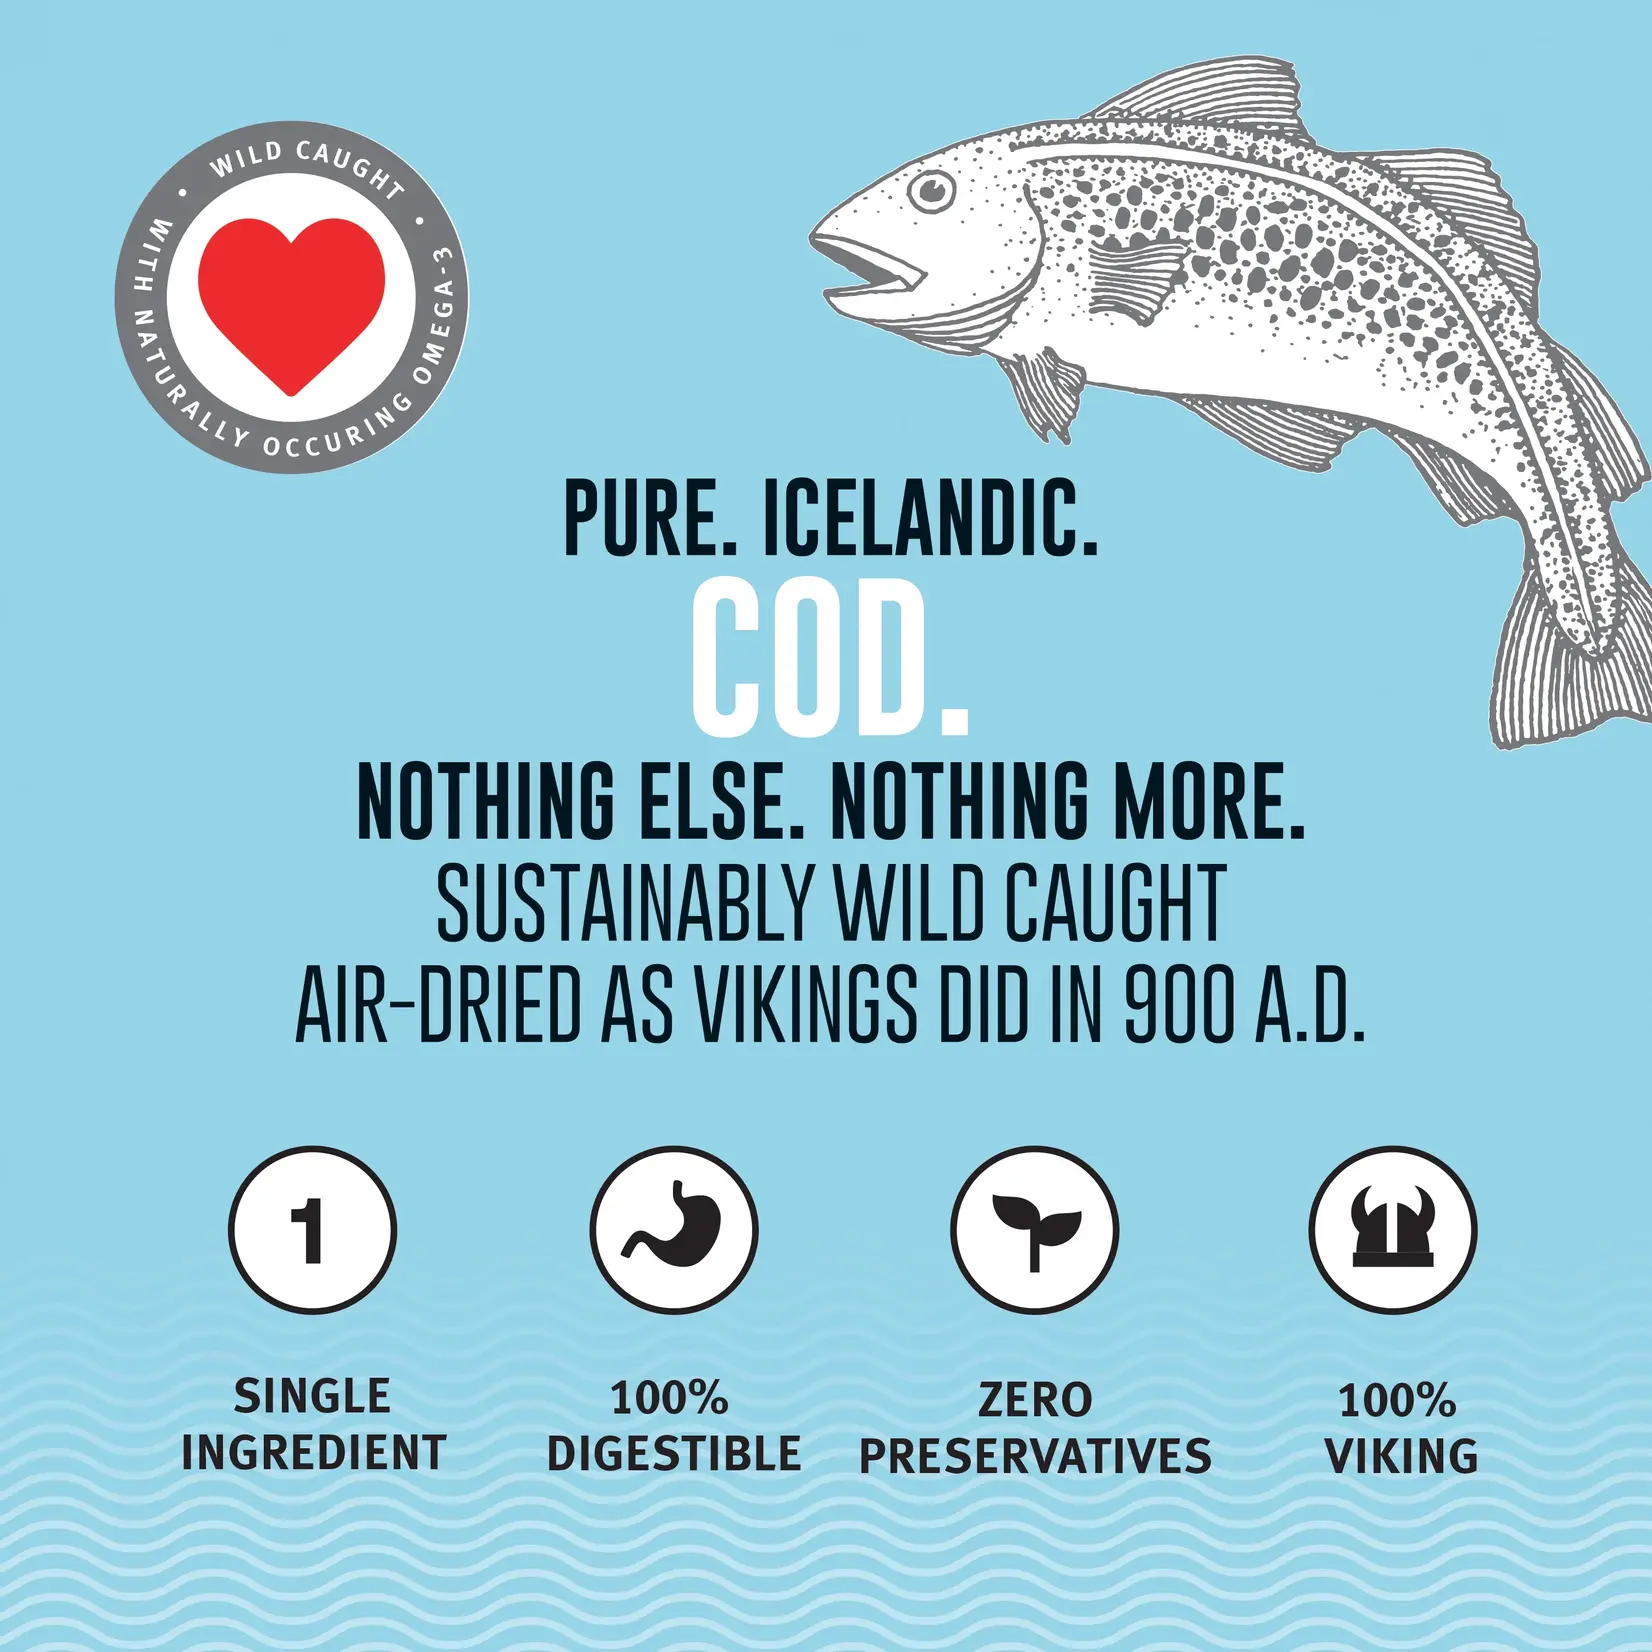 Icelandic+ Icelandic+ Cod Fish Chips Training Treats 71g